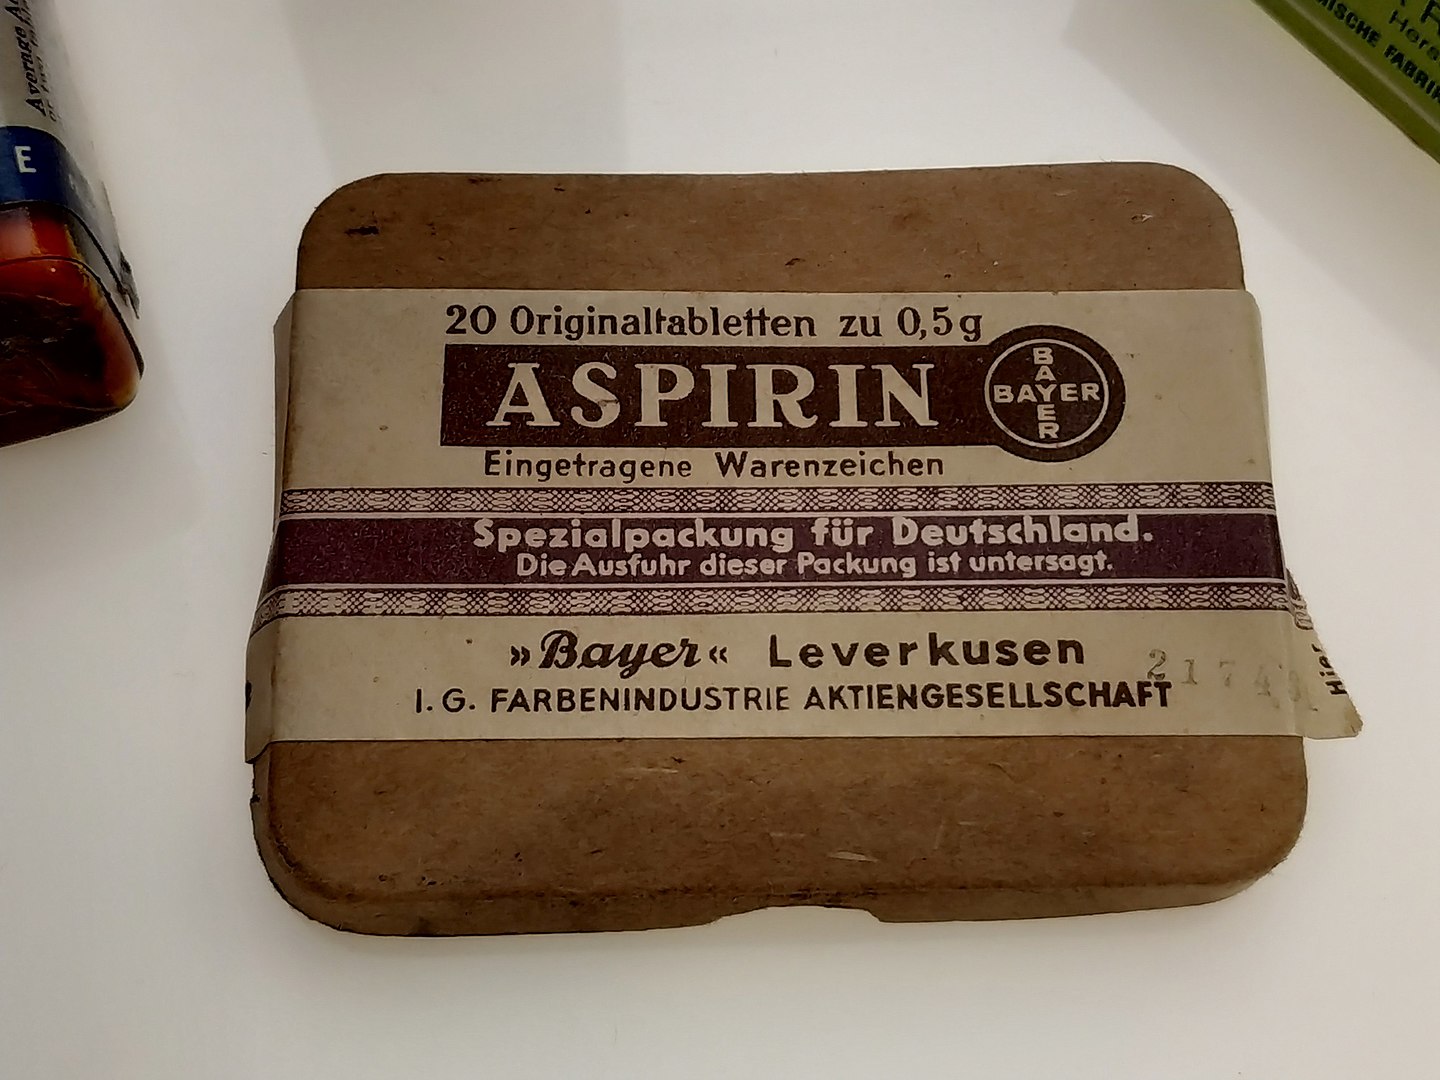 Old package of Aspirin, around 1940s